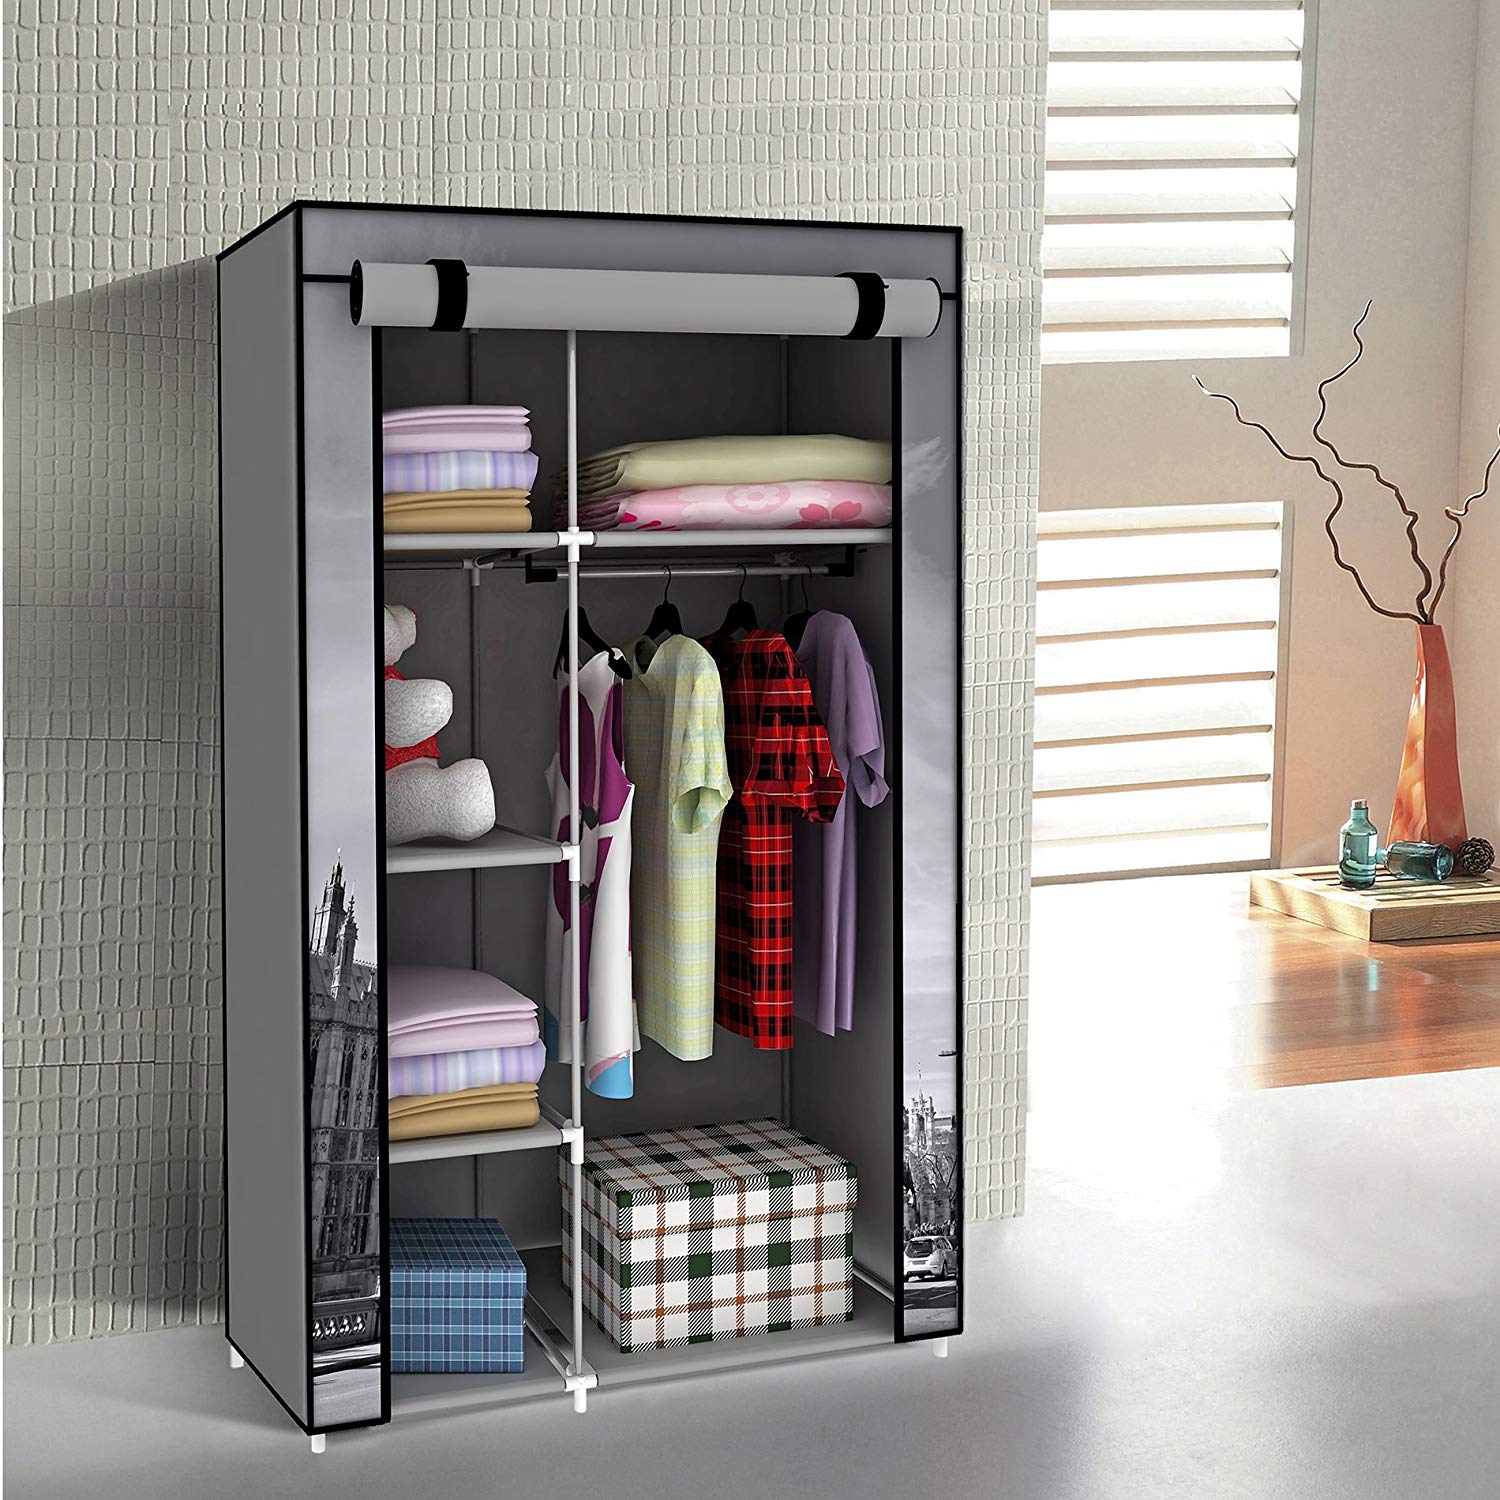 Clothes Storage amazon.com: Switch Innovation Storage Cabinet Portable Temporary Wardrobe, Freestanding Clothes WQNGFFS